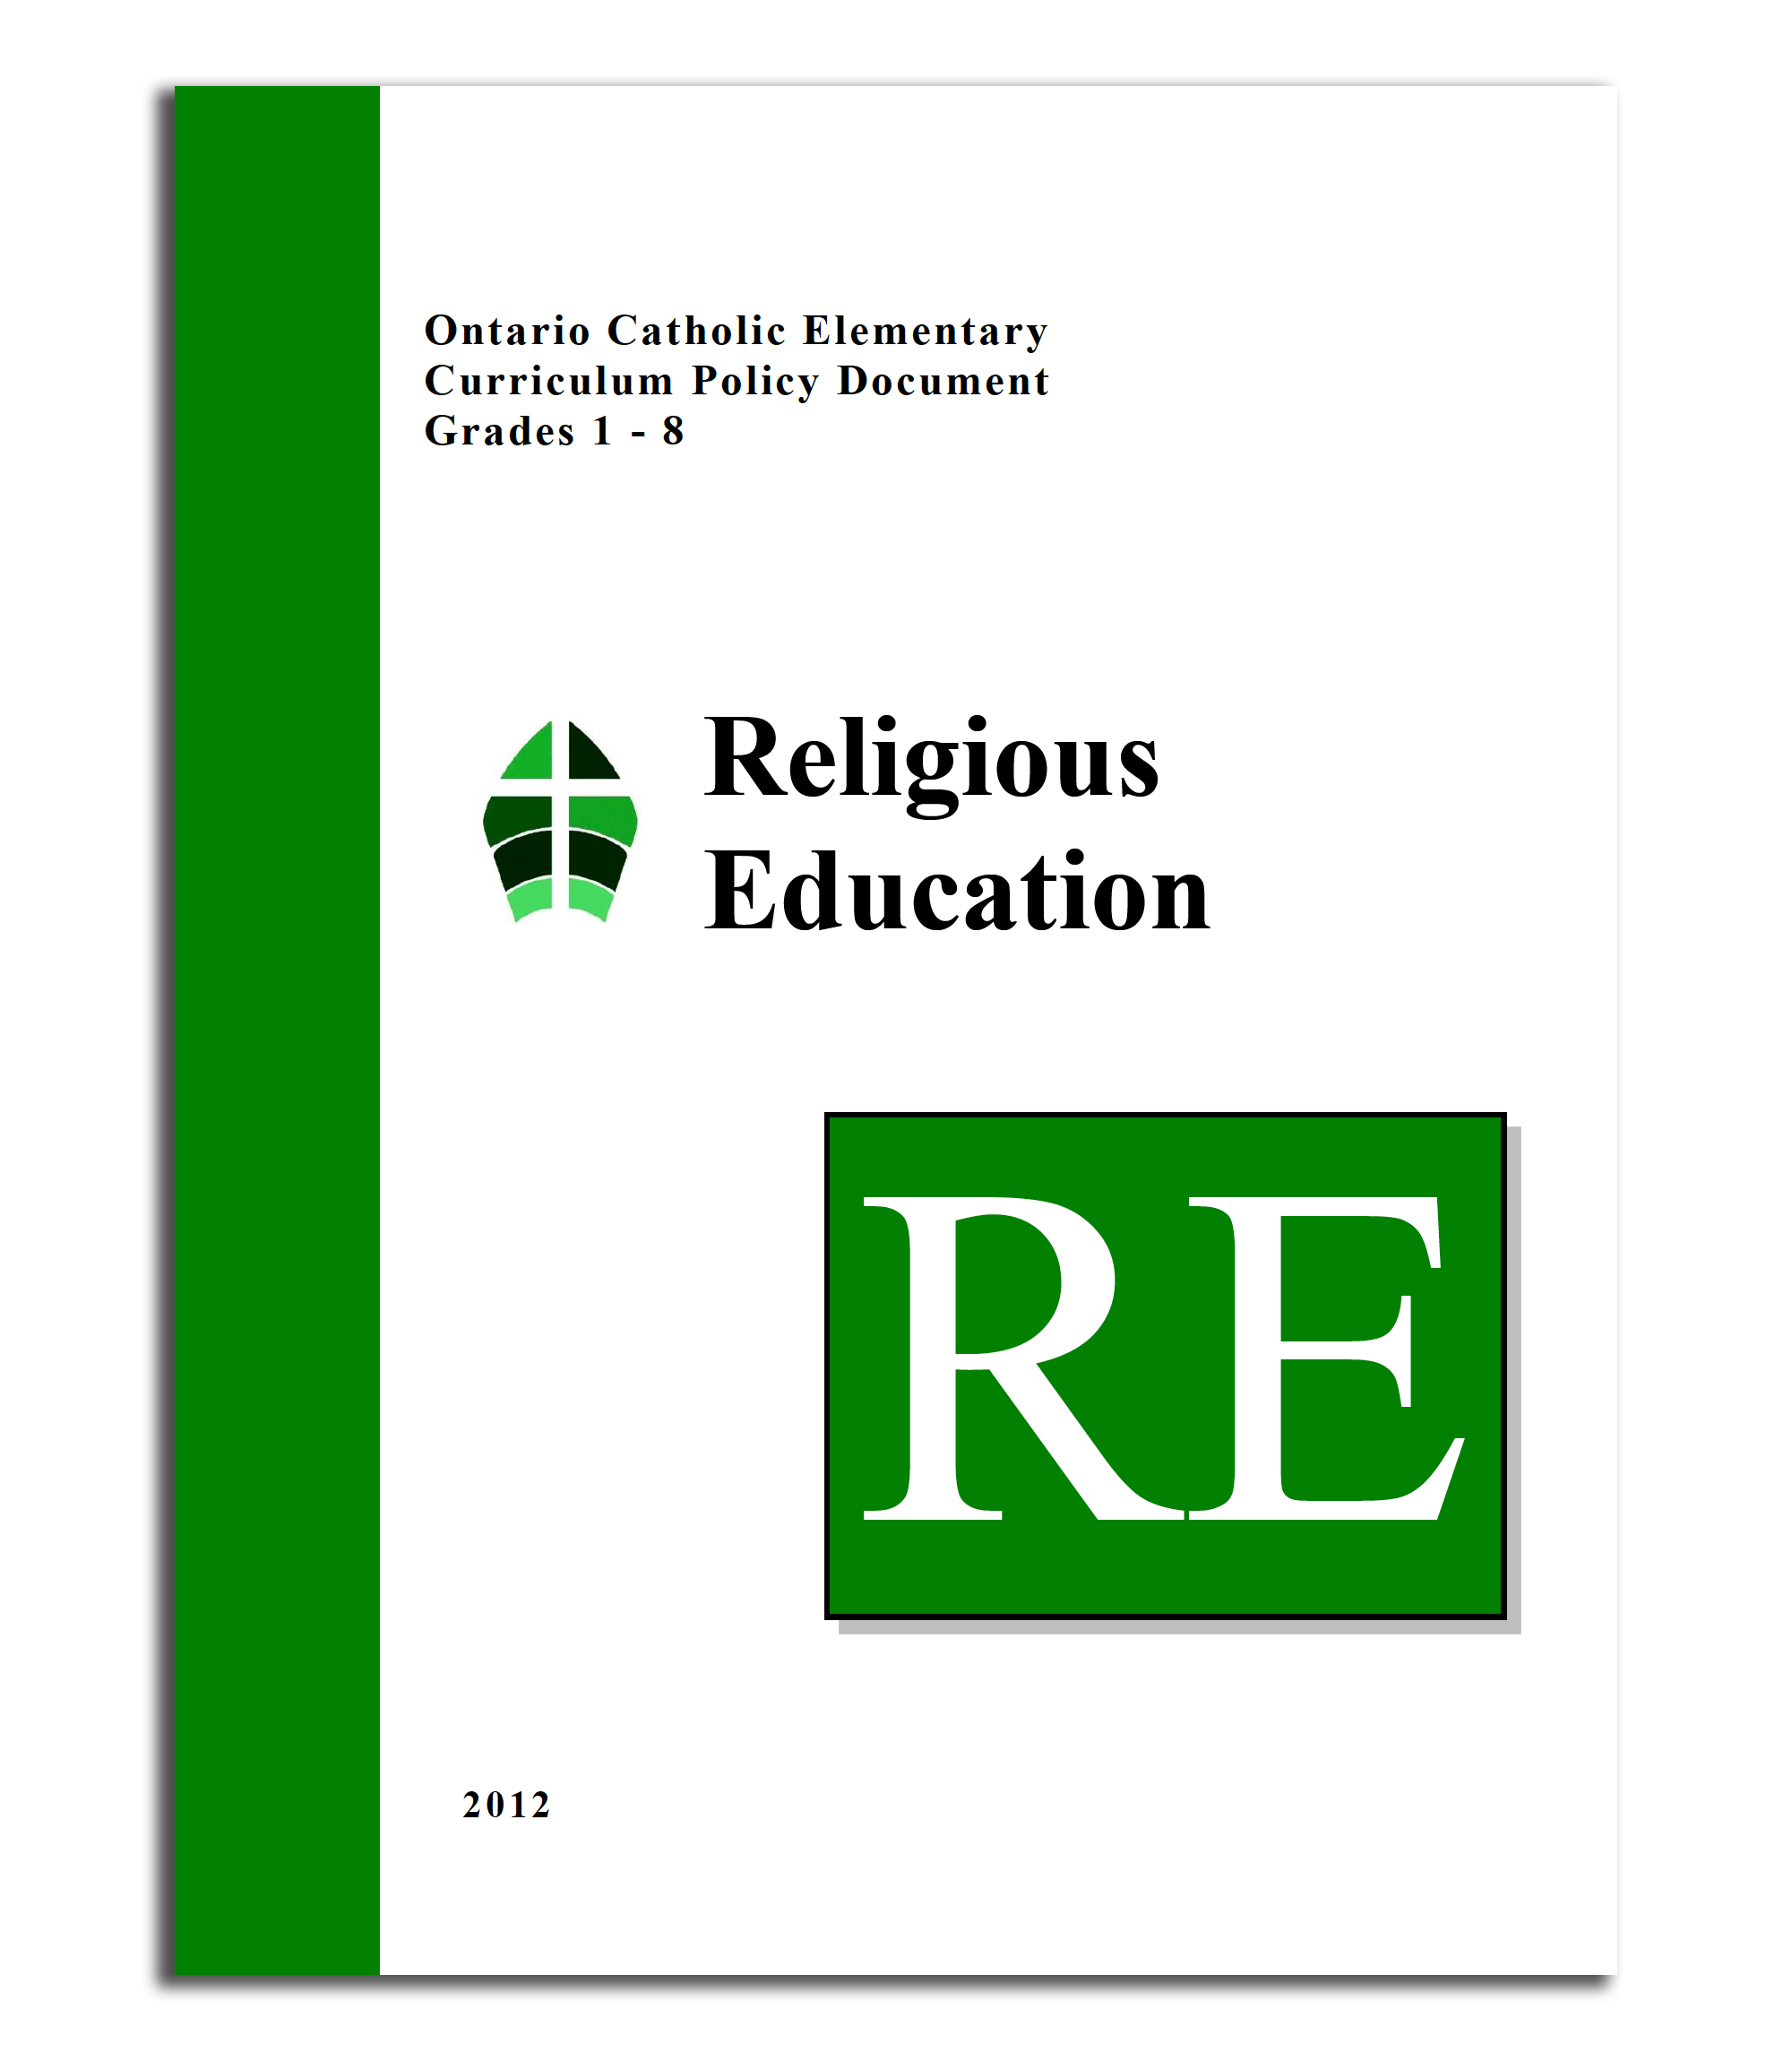 Elementary Religious Education, 2012